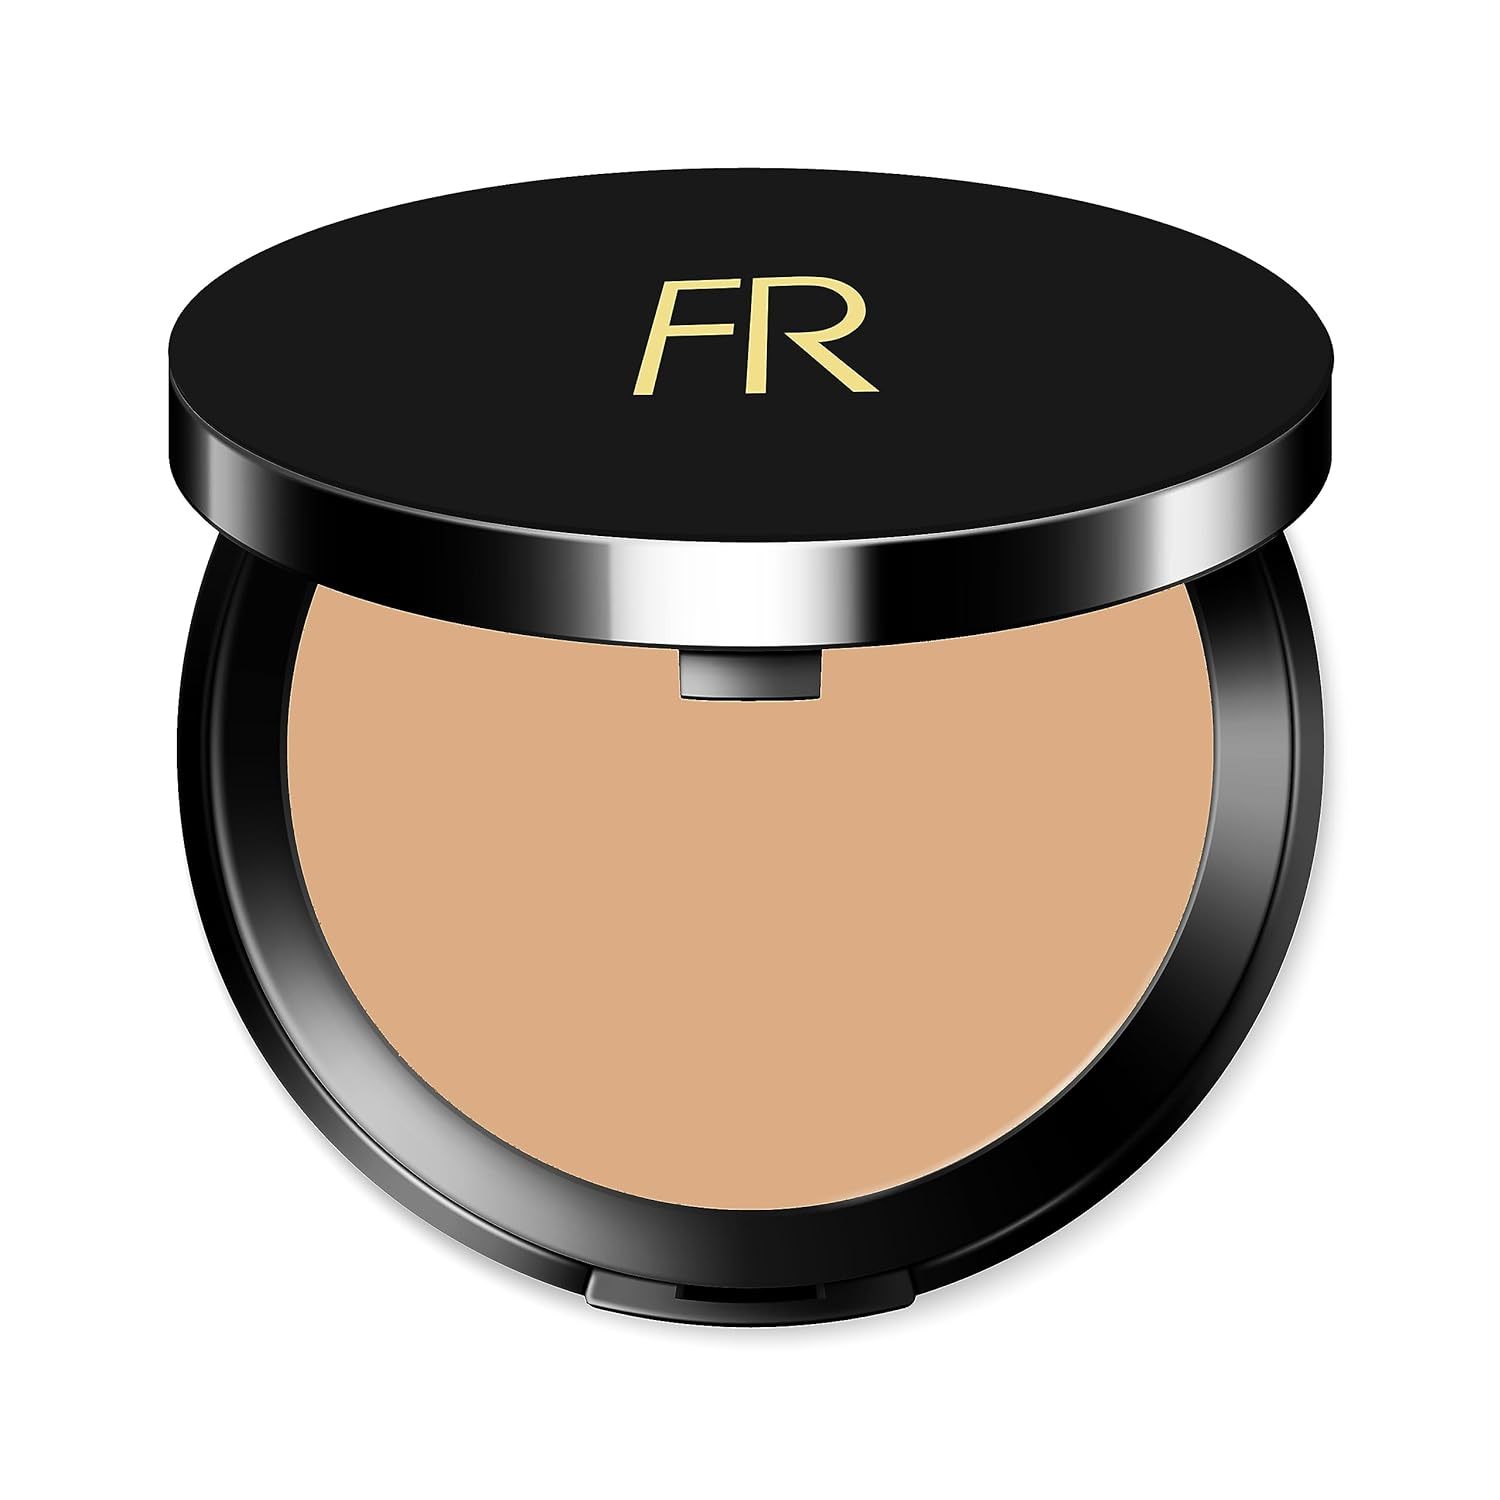 Flori Roberts Cream to Powder C3 Sand [30105] 0.30 oz (8.5 g)  - $29.99